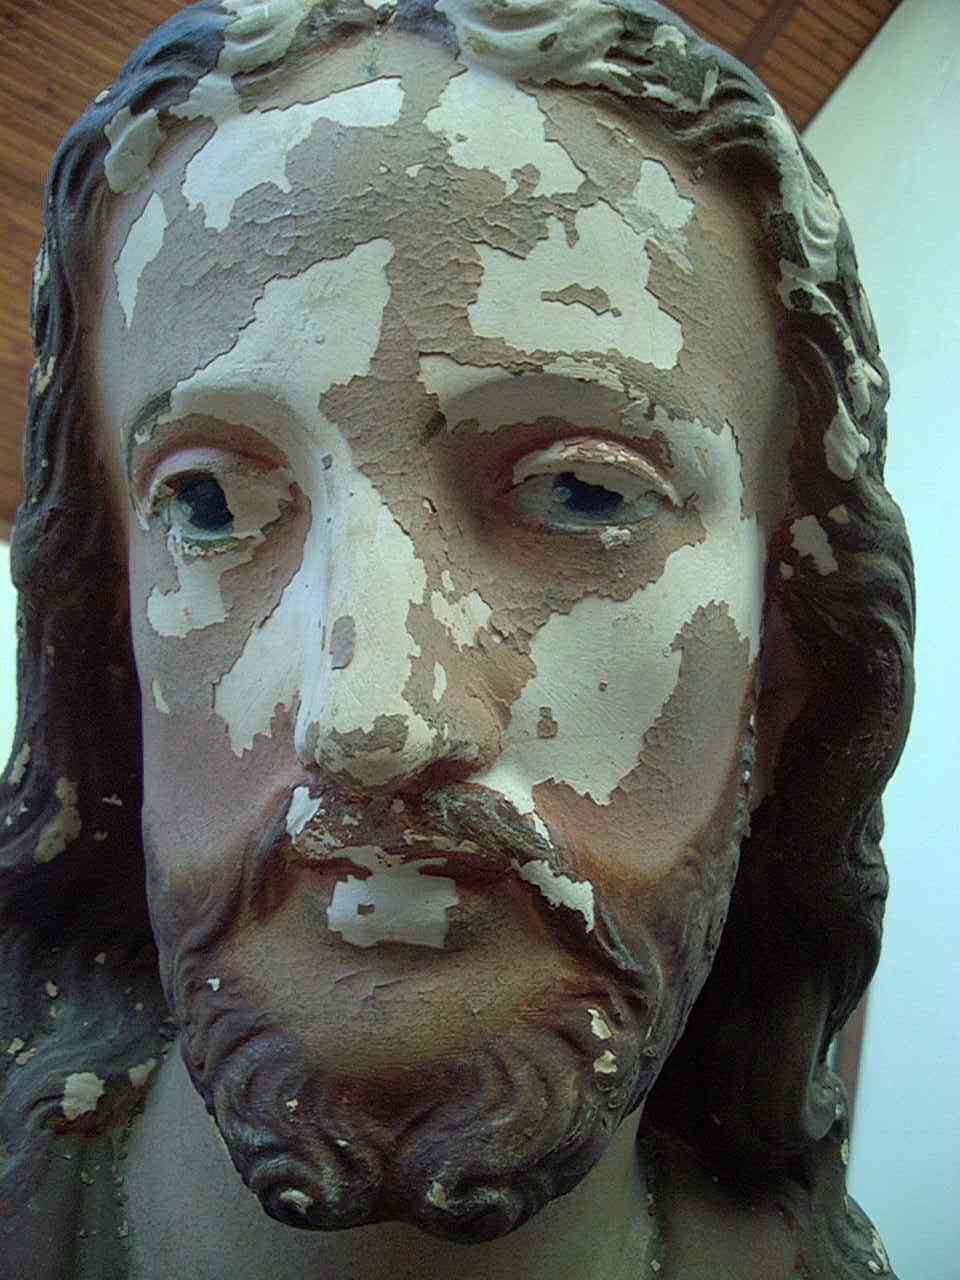 Detail: Damaged head / face of plaster statue “Sacred Heart of Jesus”